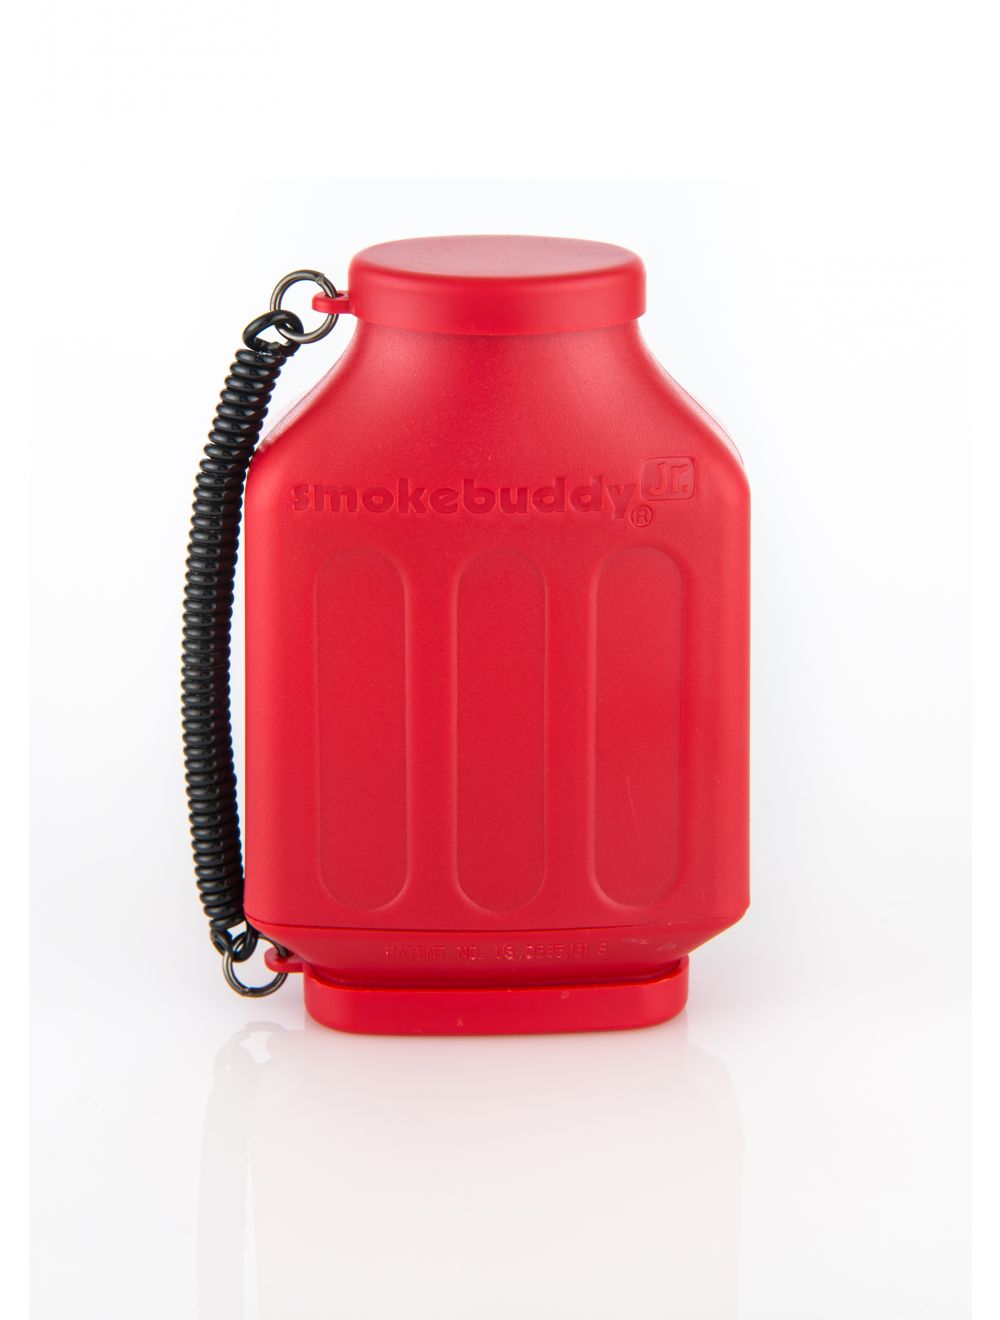 Red Smokebuddy Jr Personal Air Filter 